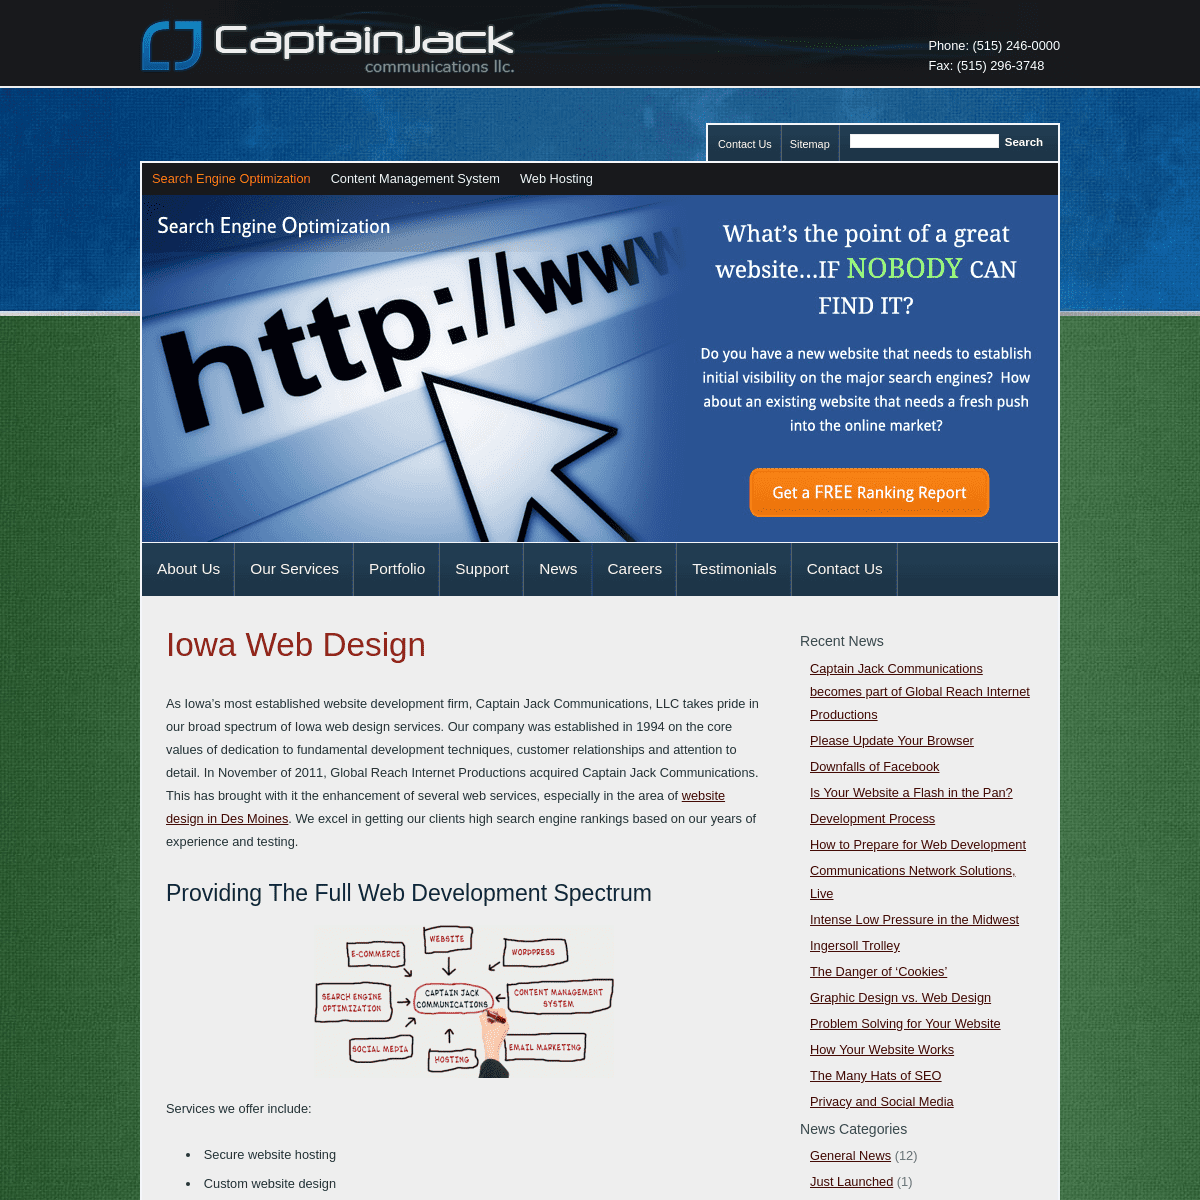 Iowa web design from Captain Jack Communications, LLC